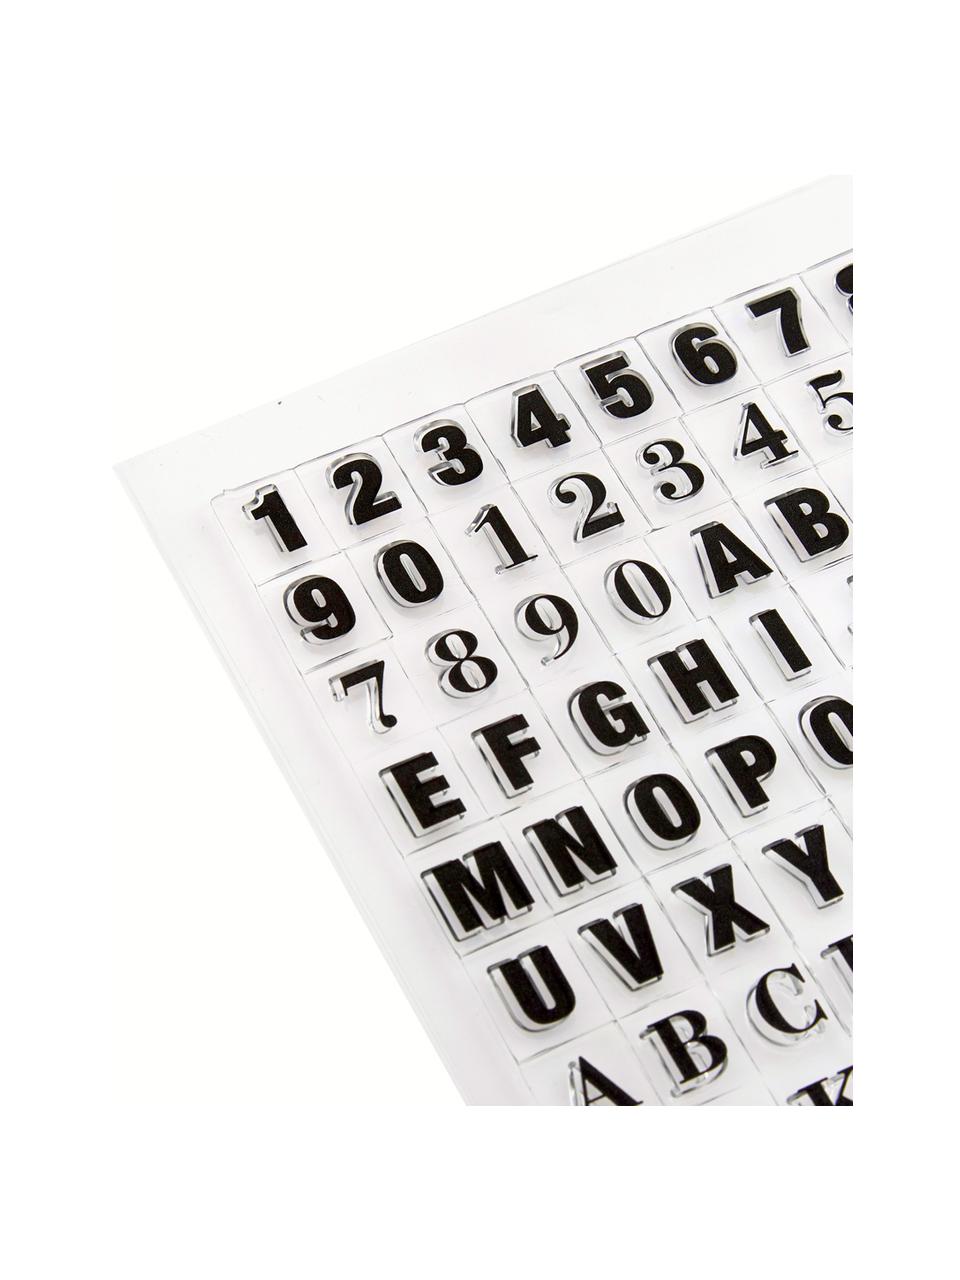 Set timbri Letters & Numbers, Silicone, Nero trasparente, Larg. 14 x Alt. 21 cm